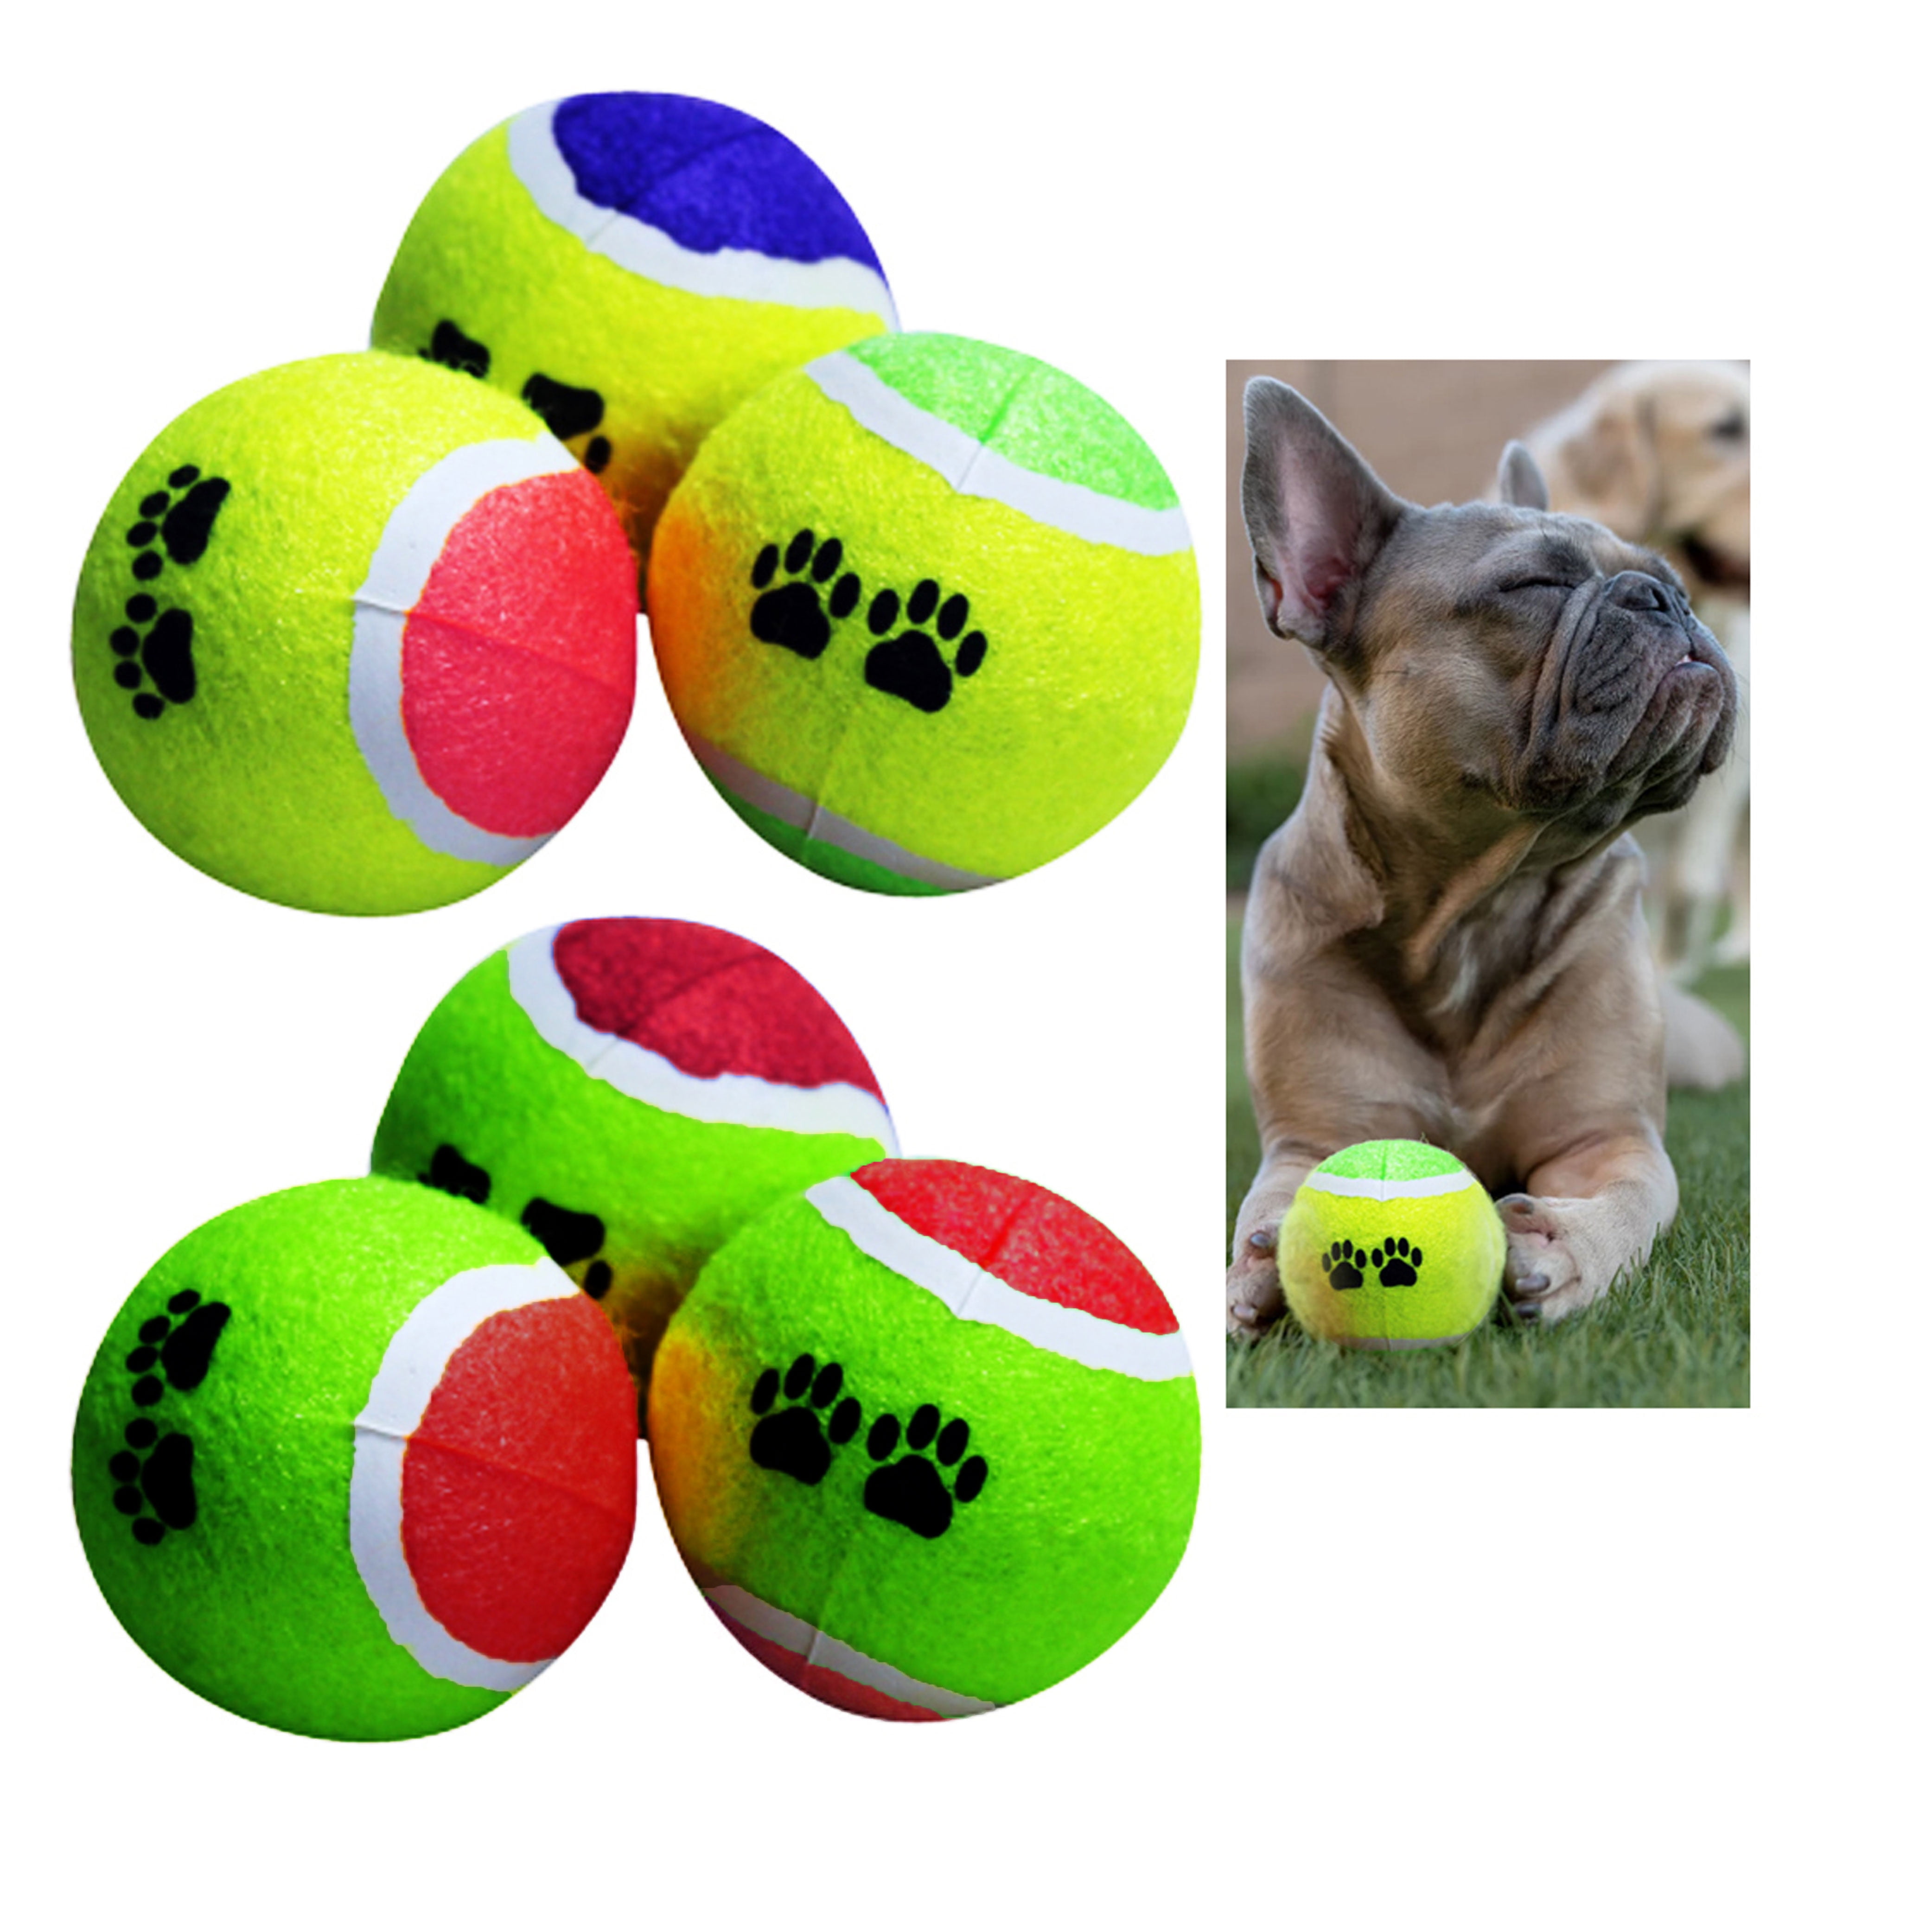 Tennis Balls Ball Games Dog Pet Toy Pets Bouncing Sports Outdoor Games Fun Throw